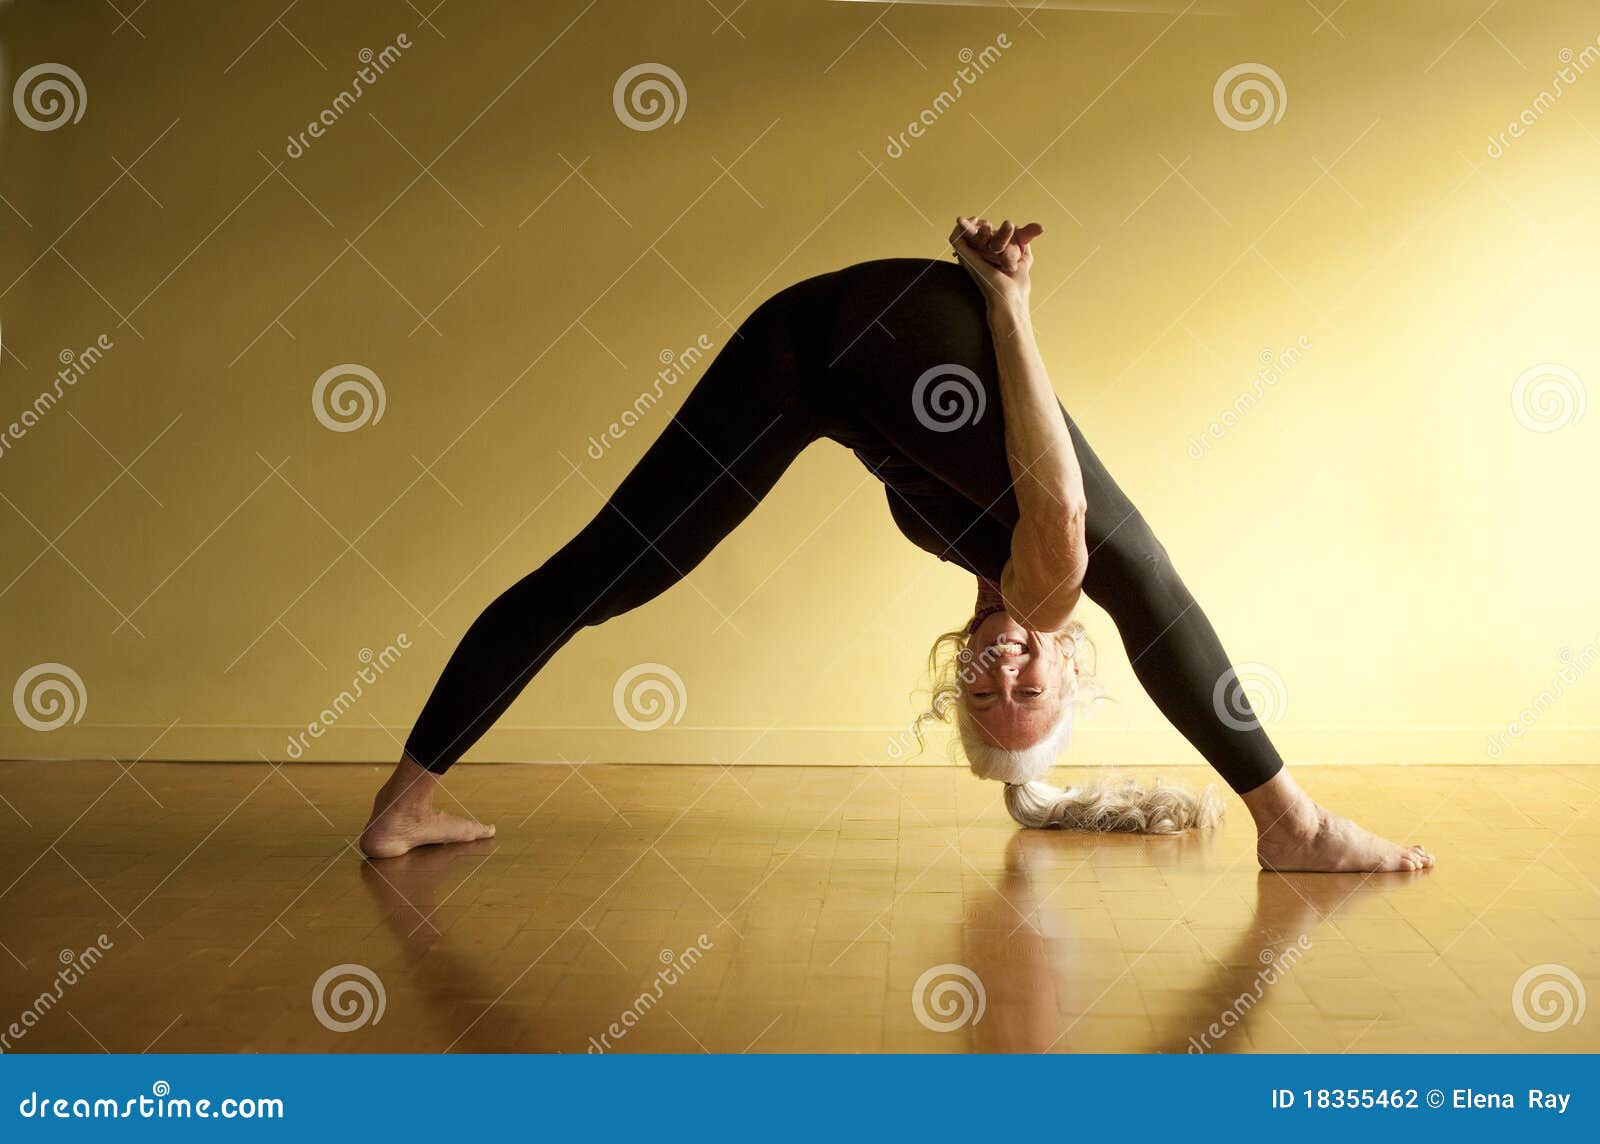 Funny Yoga Senior Woman stock photo. Image of smiling - 18355462